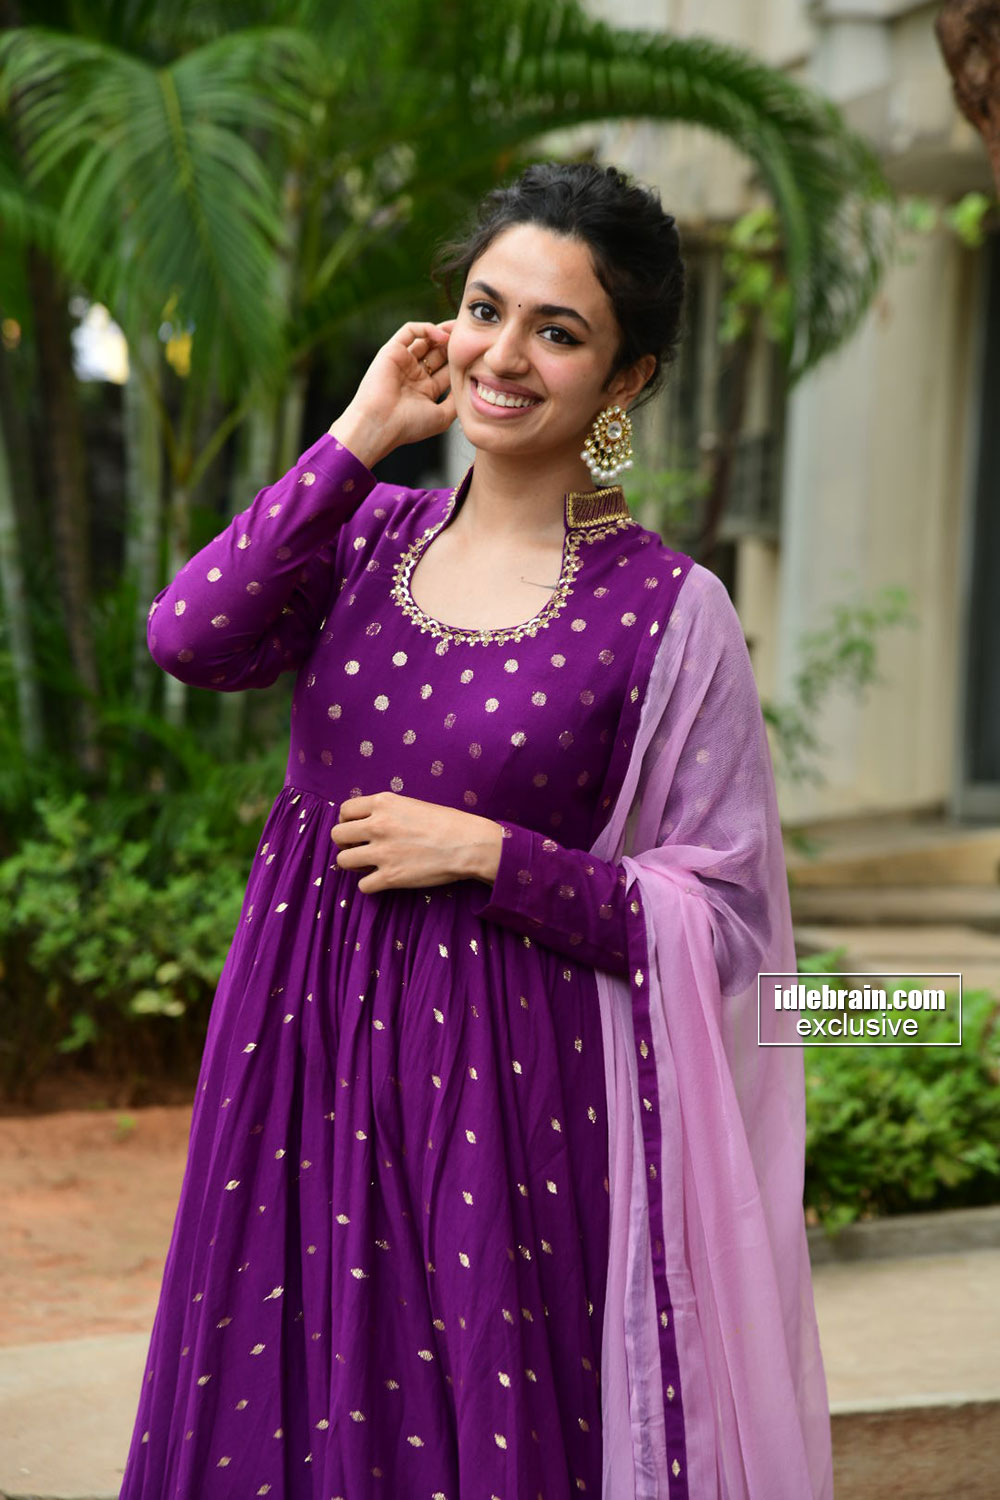 Malavika Nair photo gallery - Telugu cinema actress